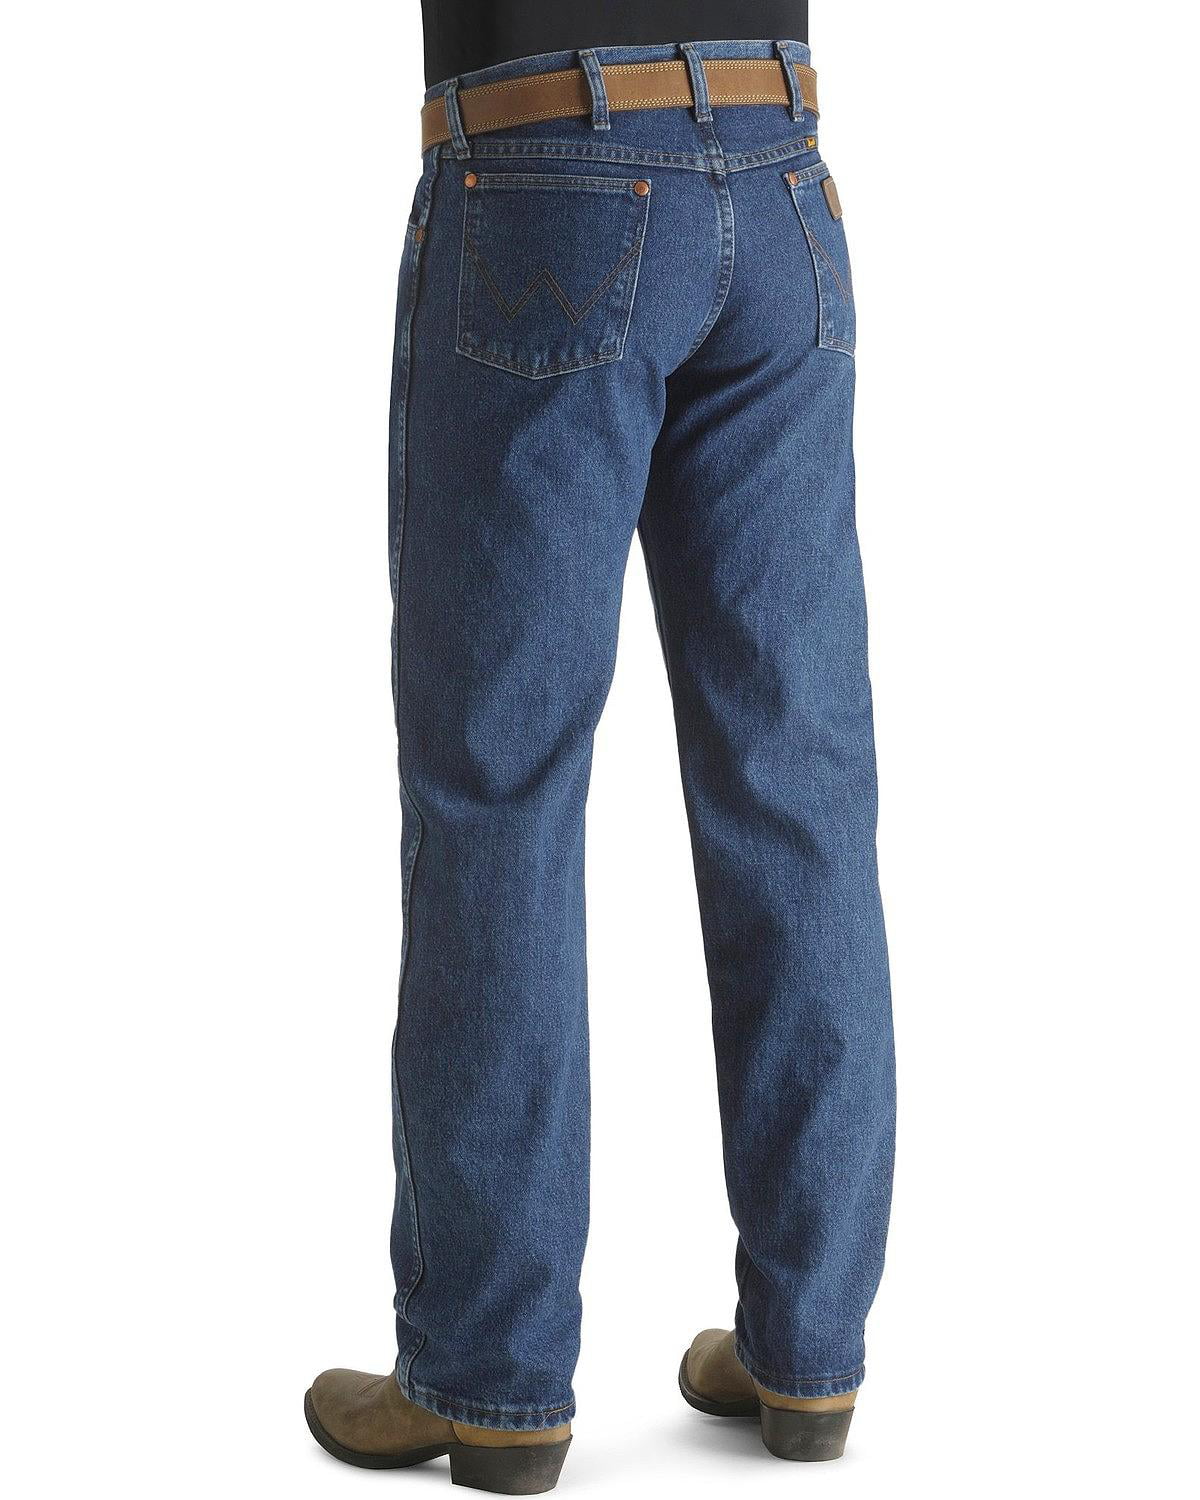 Wrangler - Wrangler Mens Original Fit Cowboy Cut Jeans - Stonewashed ...